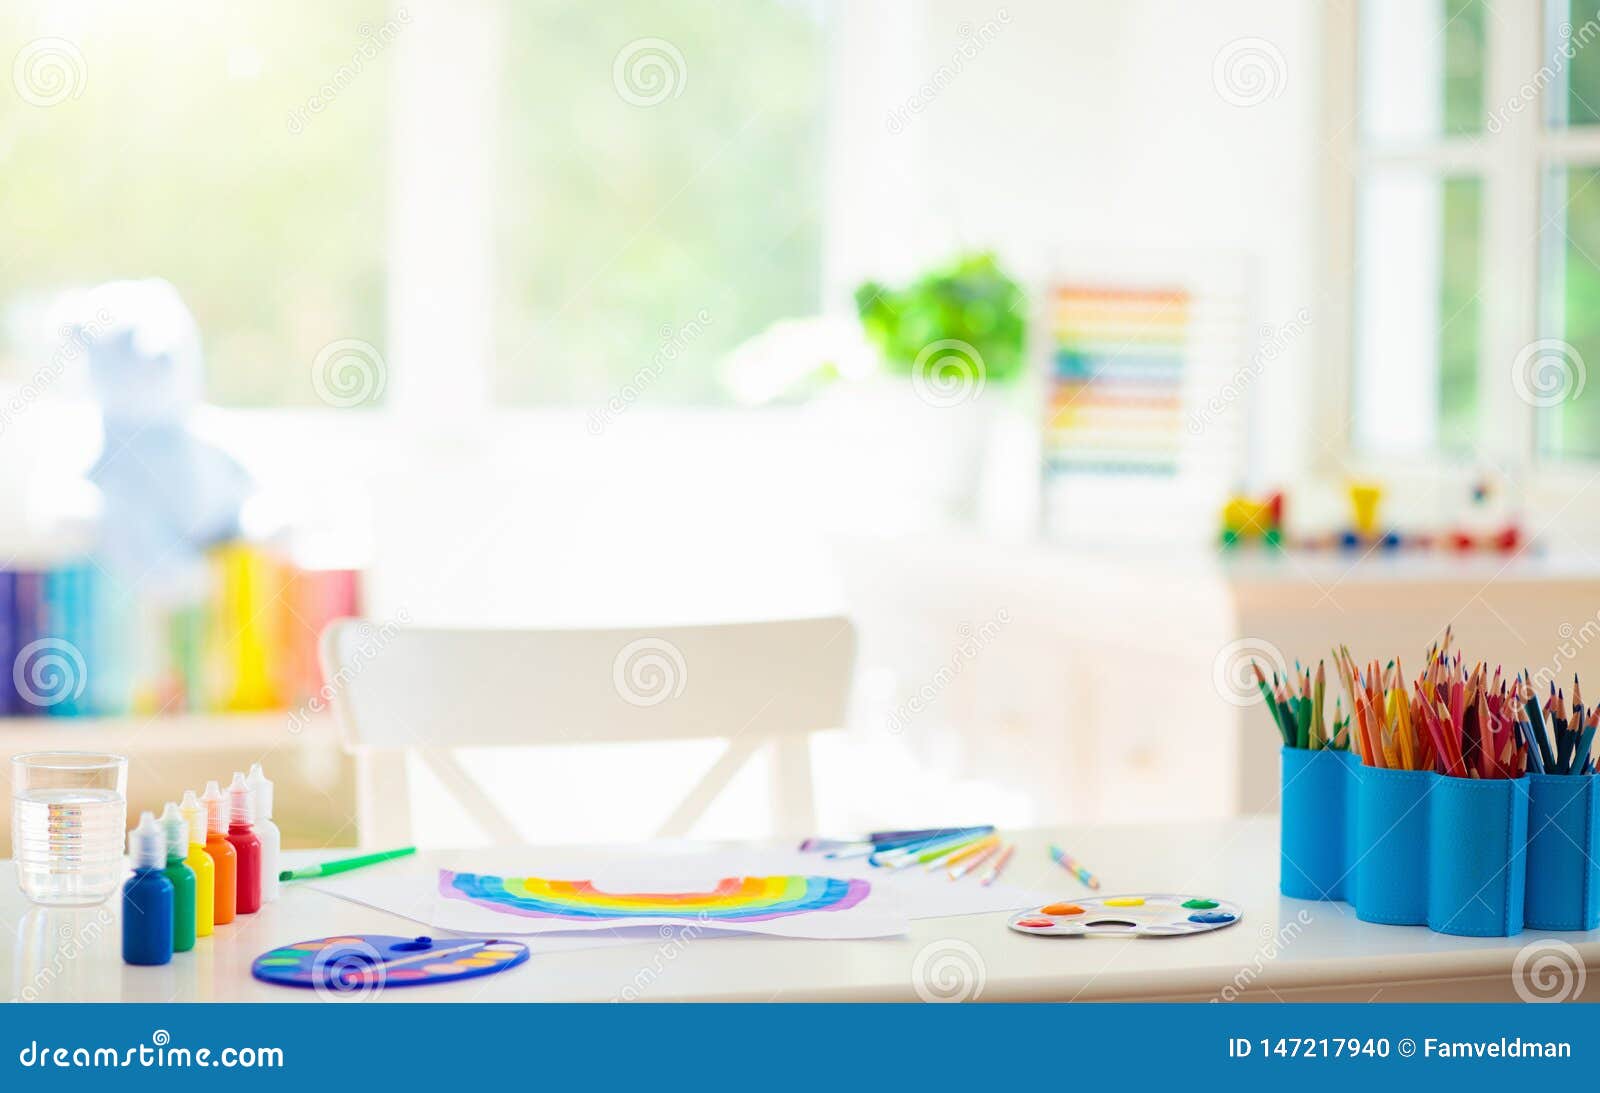 https://thumbs.dreamstime.com/z/kids-bedroom-wooden-paint-art-supplies-painting-white-desk-arts-crafts-school-drawing-materials-children-sunny-147217940.jpg